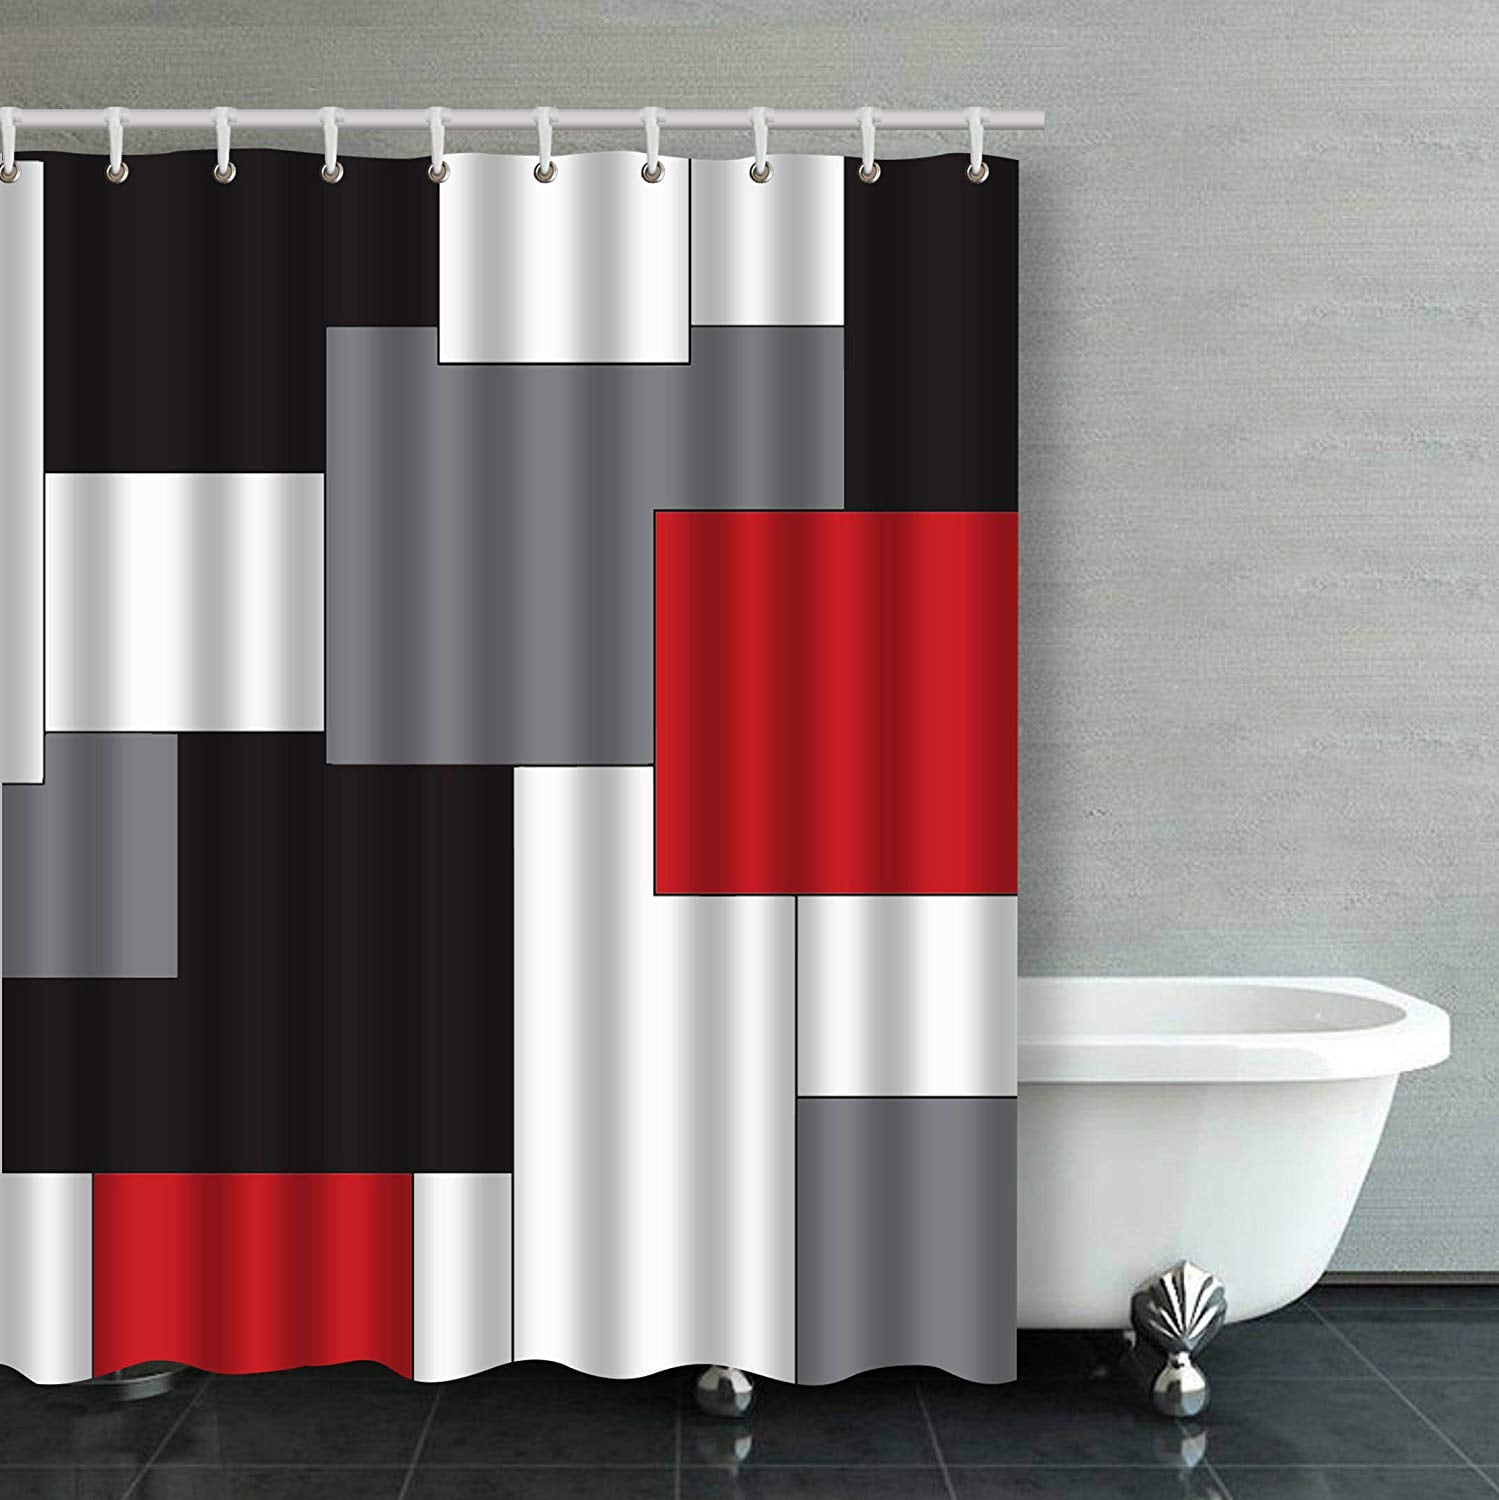 Black and White Geometric Patterns Shower Curtain Set Bathroom Waterproof Fabric 